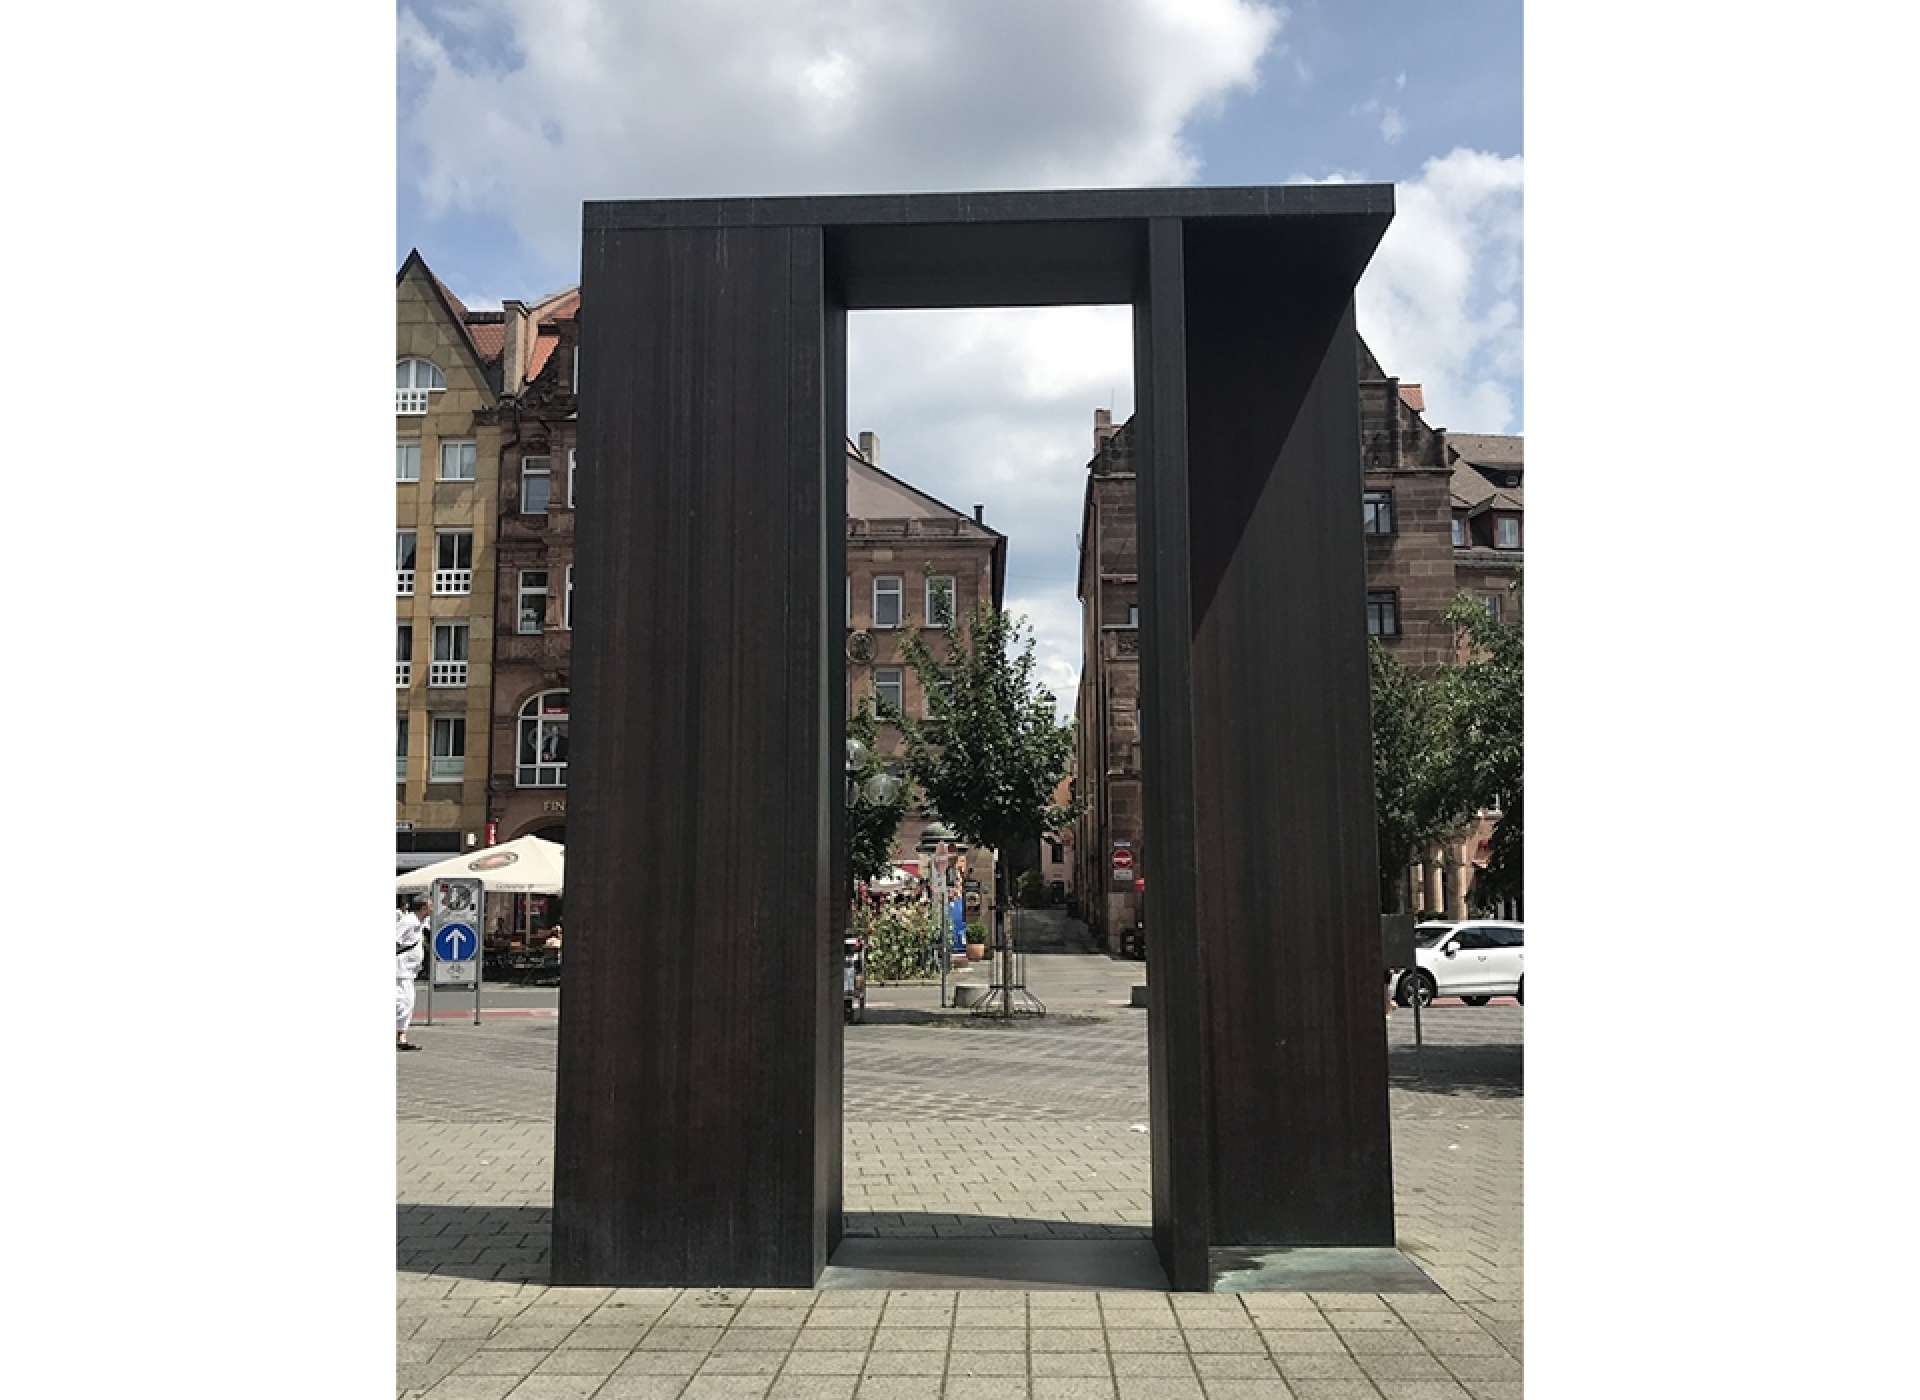 Forced Labor Memorial Nuremberg